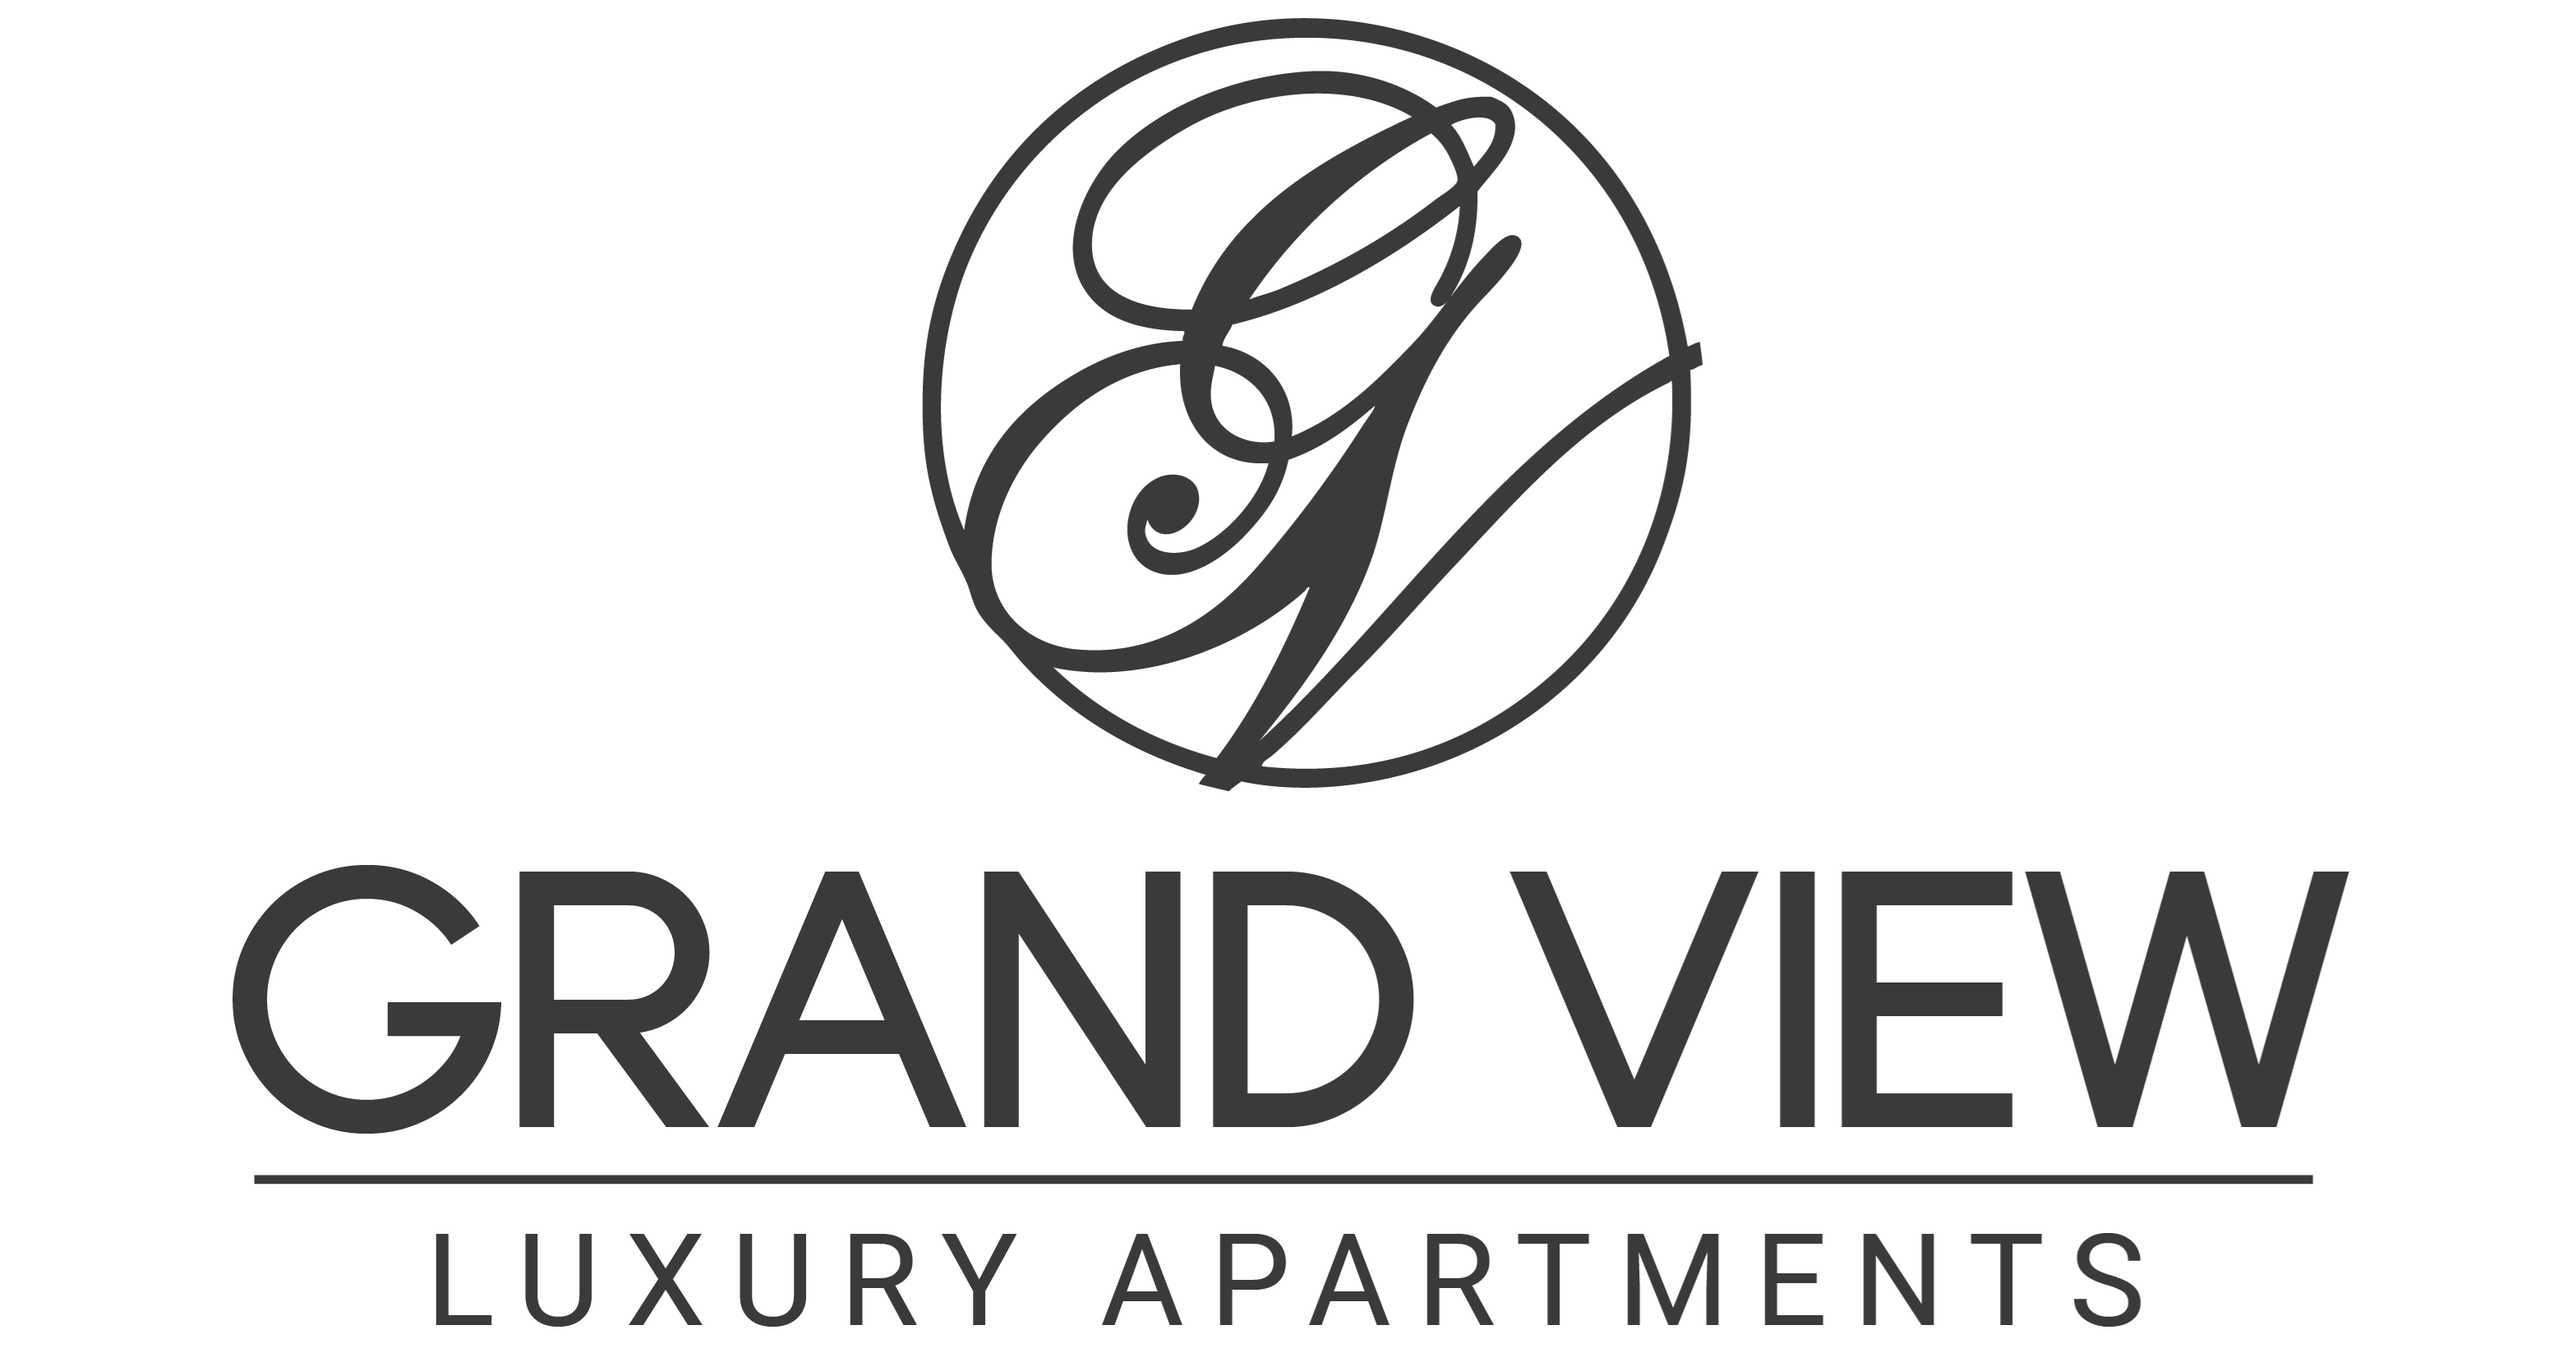 Luxury Apartment Logo - Grand View Luxury Apartments | Apartments in Wilmington, NC